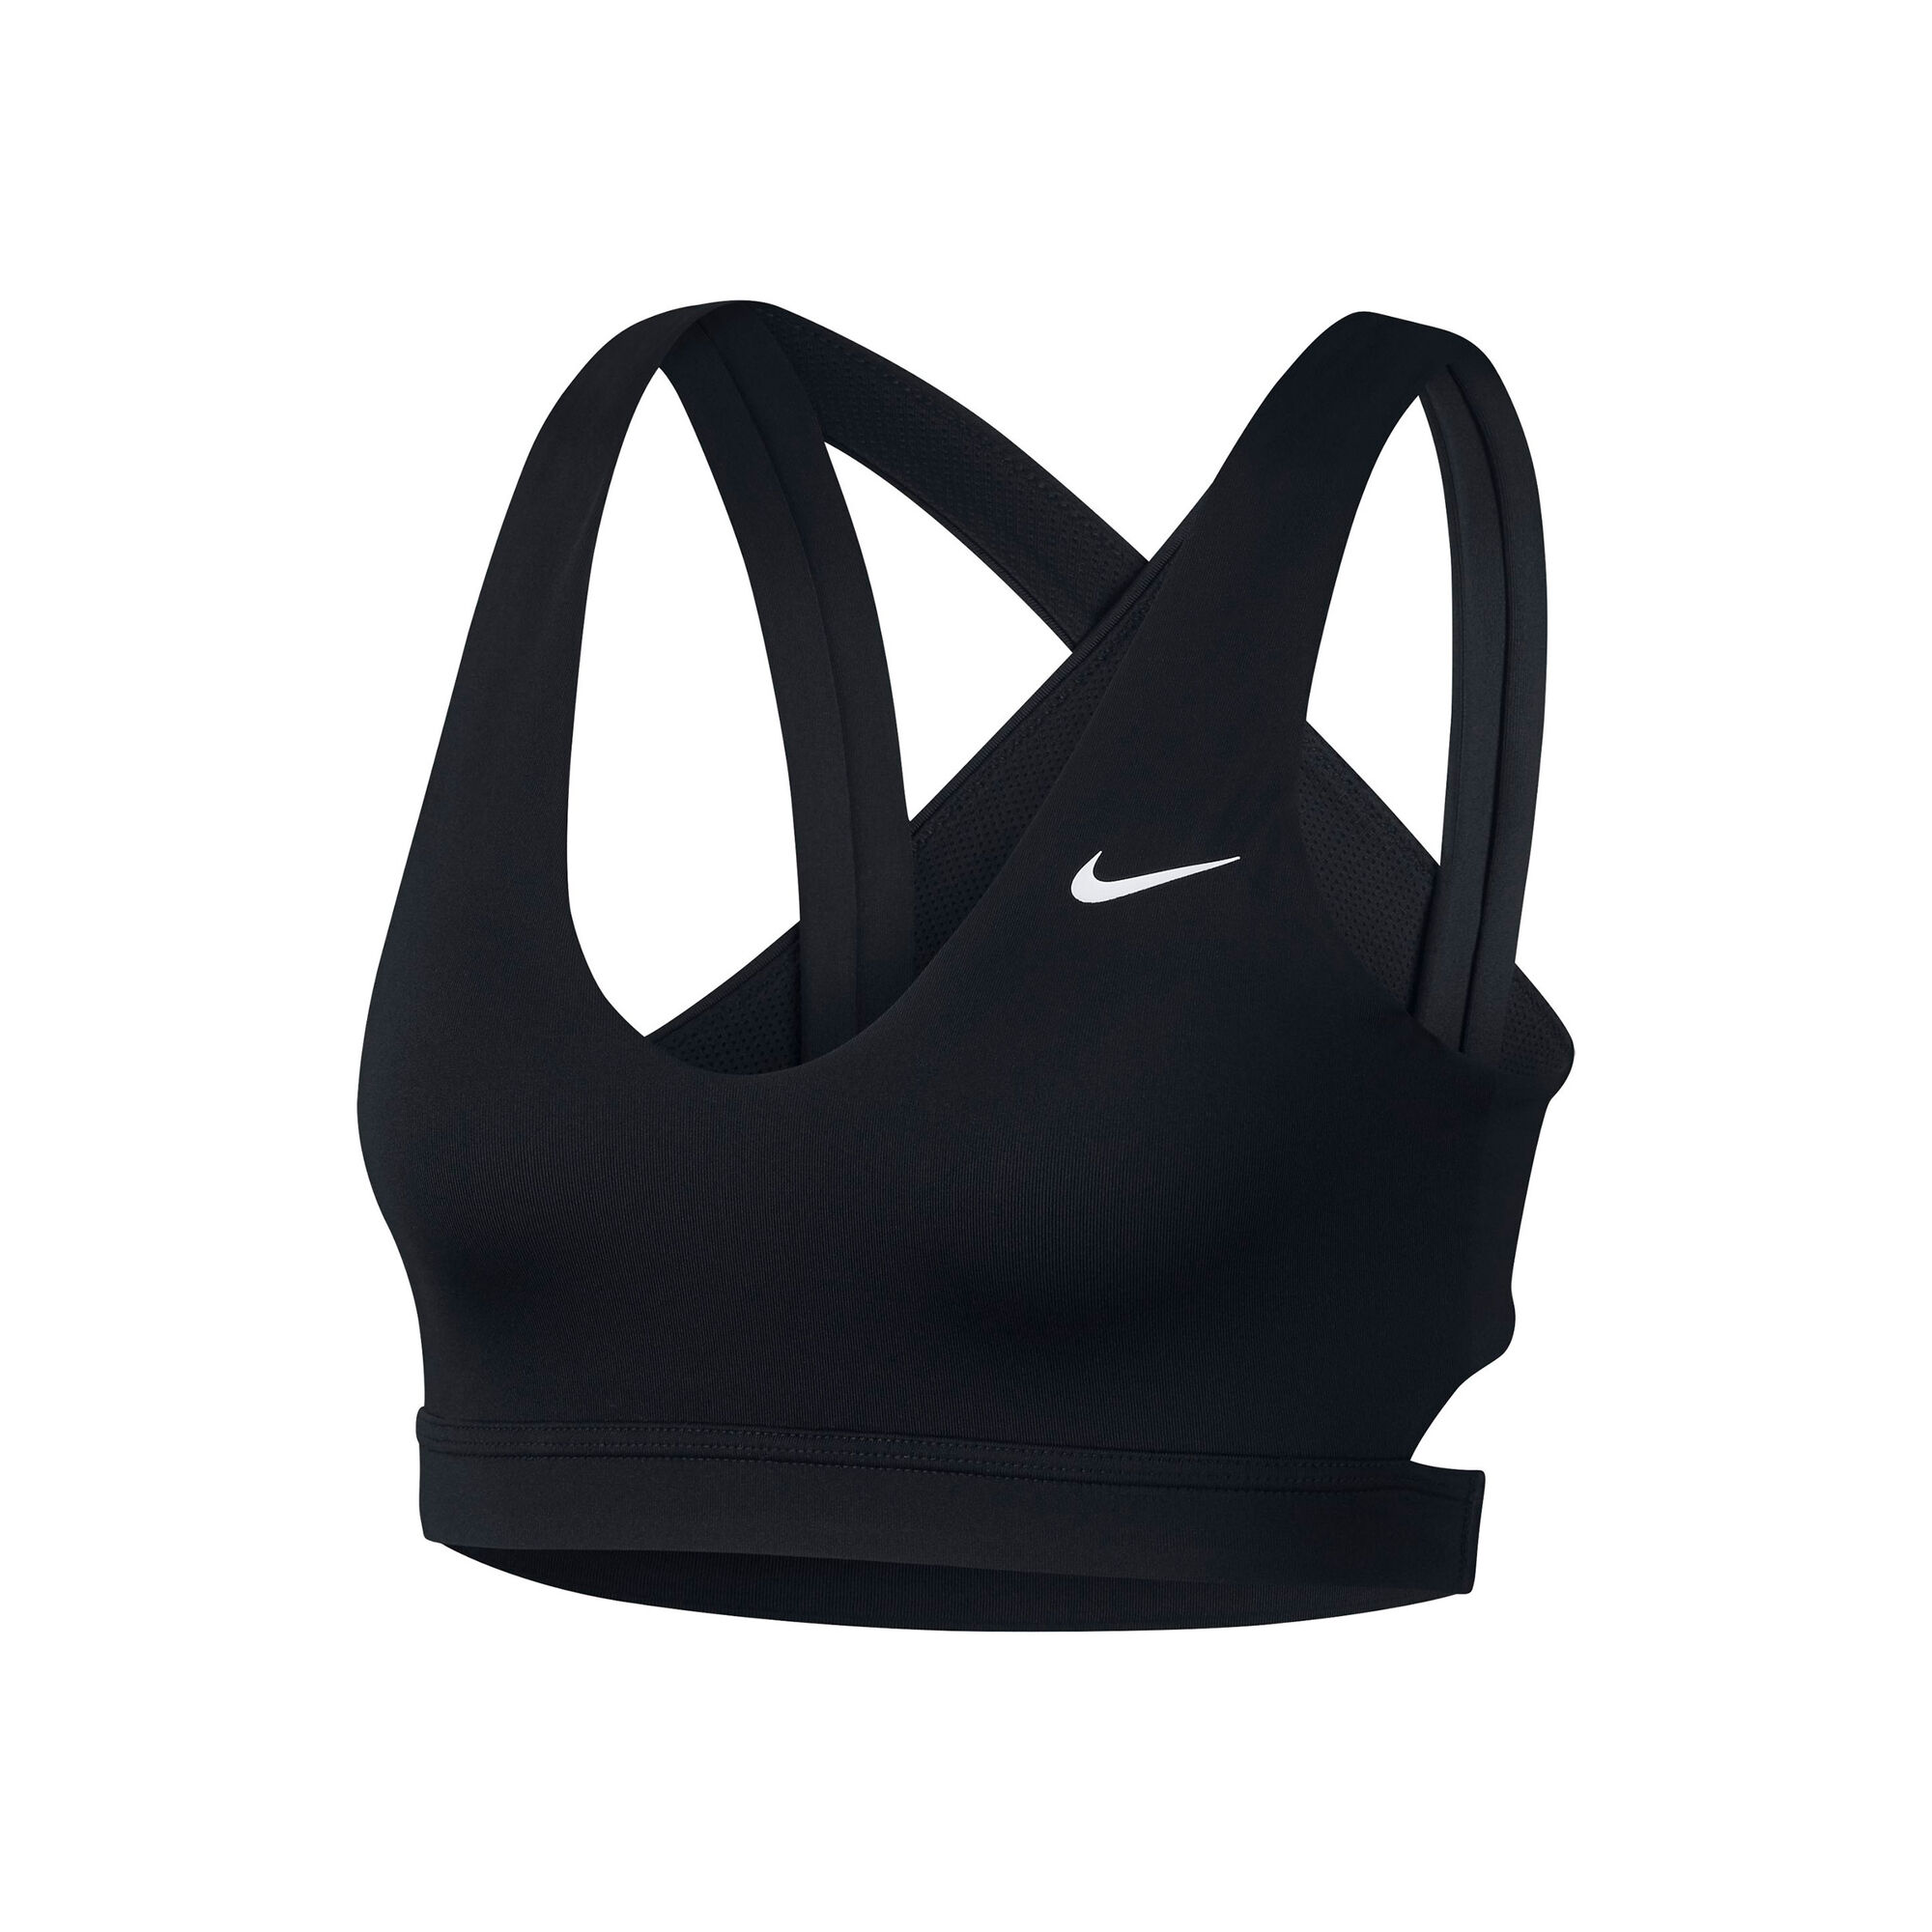 Buy Nike Indy Sports Bras Women Black, White online